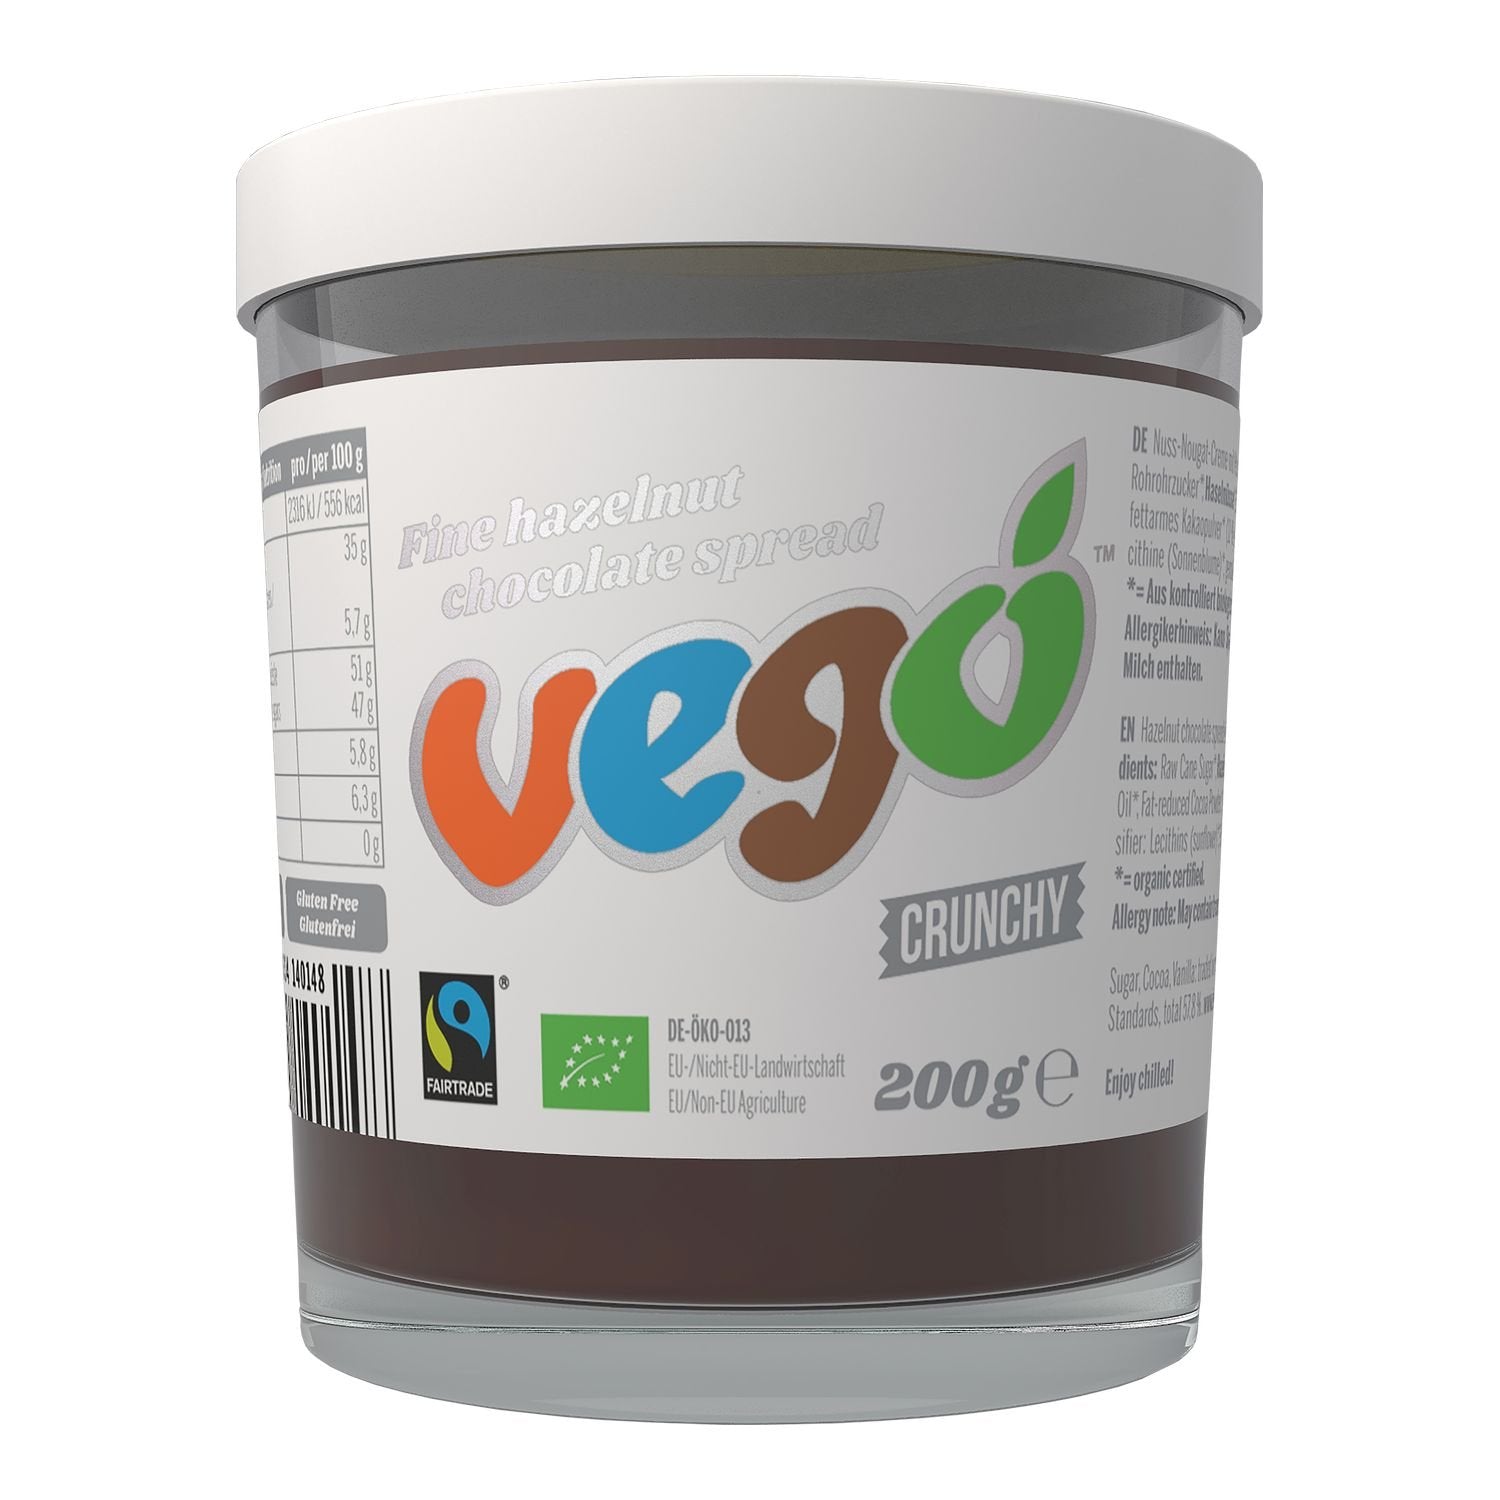 Vego Fine Hazelnut Chocolate Spread (crunchy) - Just Natural